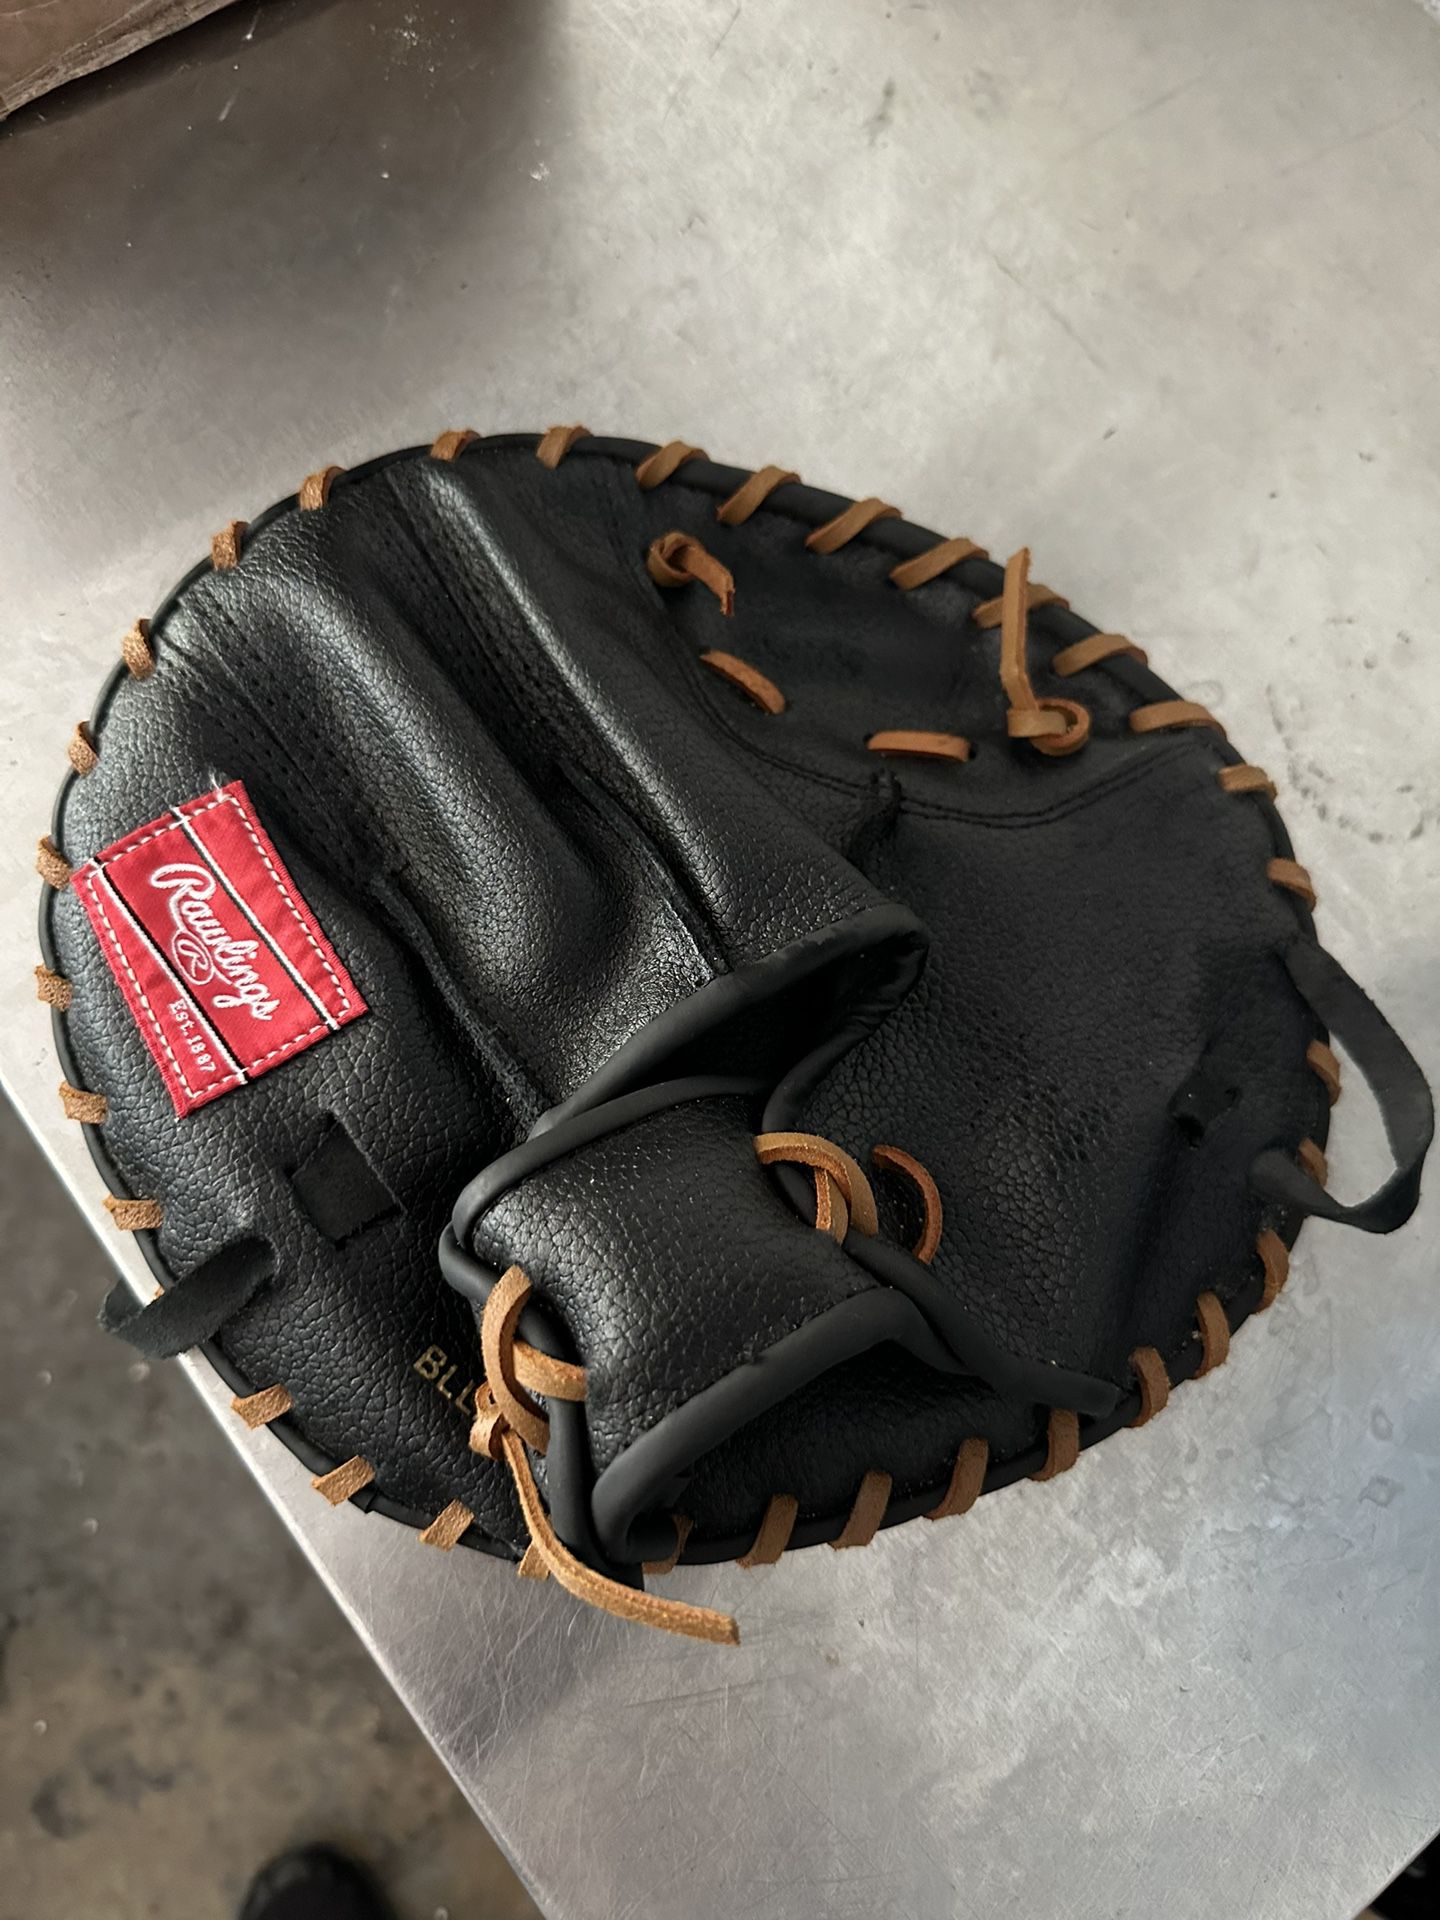 Rawlings Baseball Pancake Glove